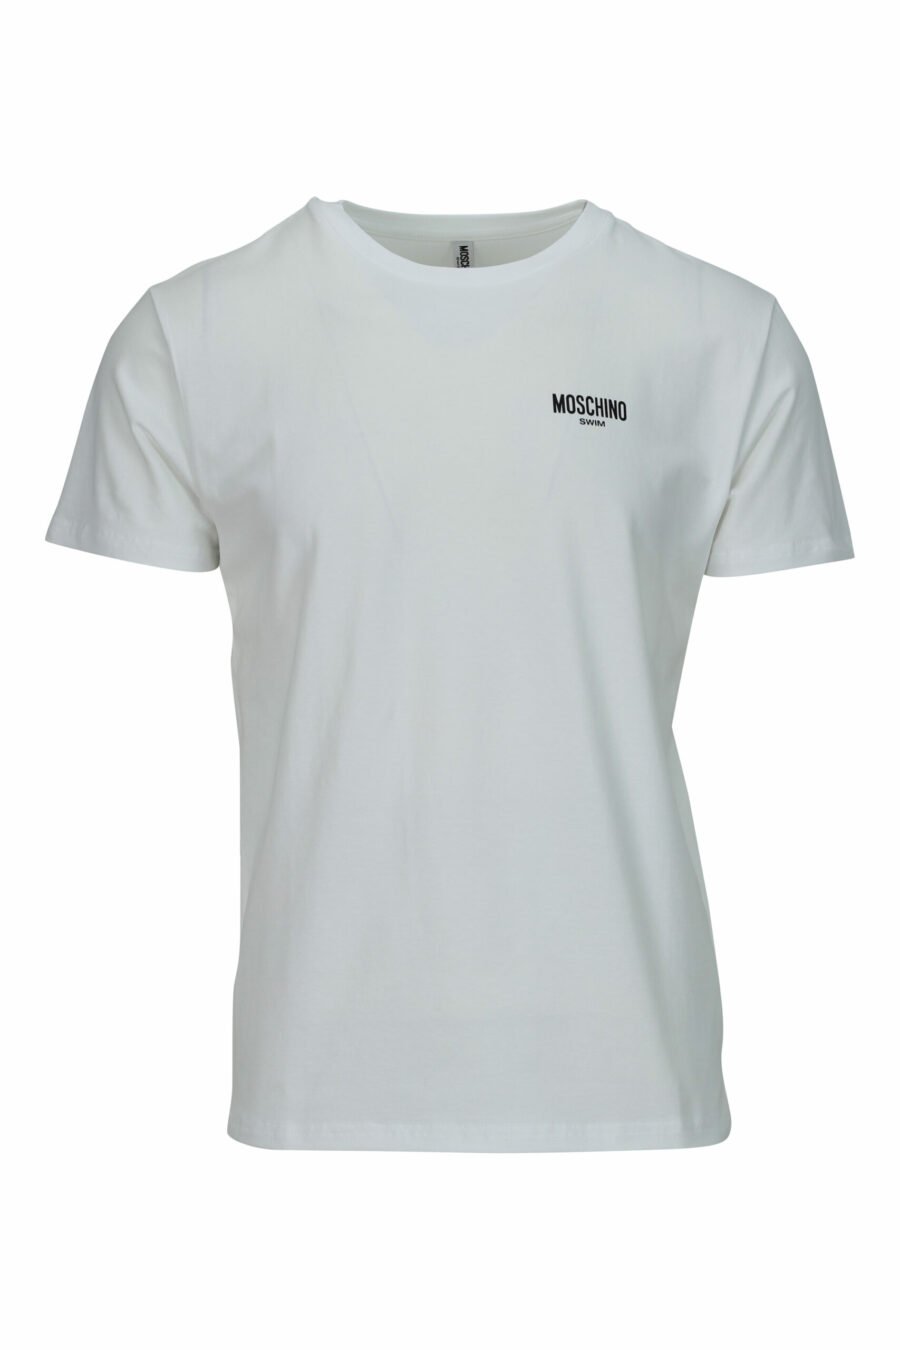 Camiseta blanca con minilogo "swim" - 667113673356 scaled